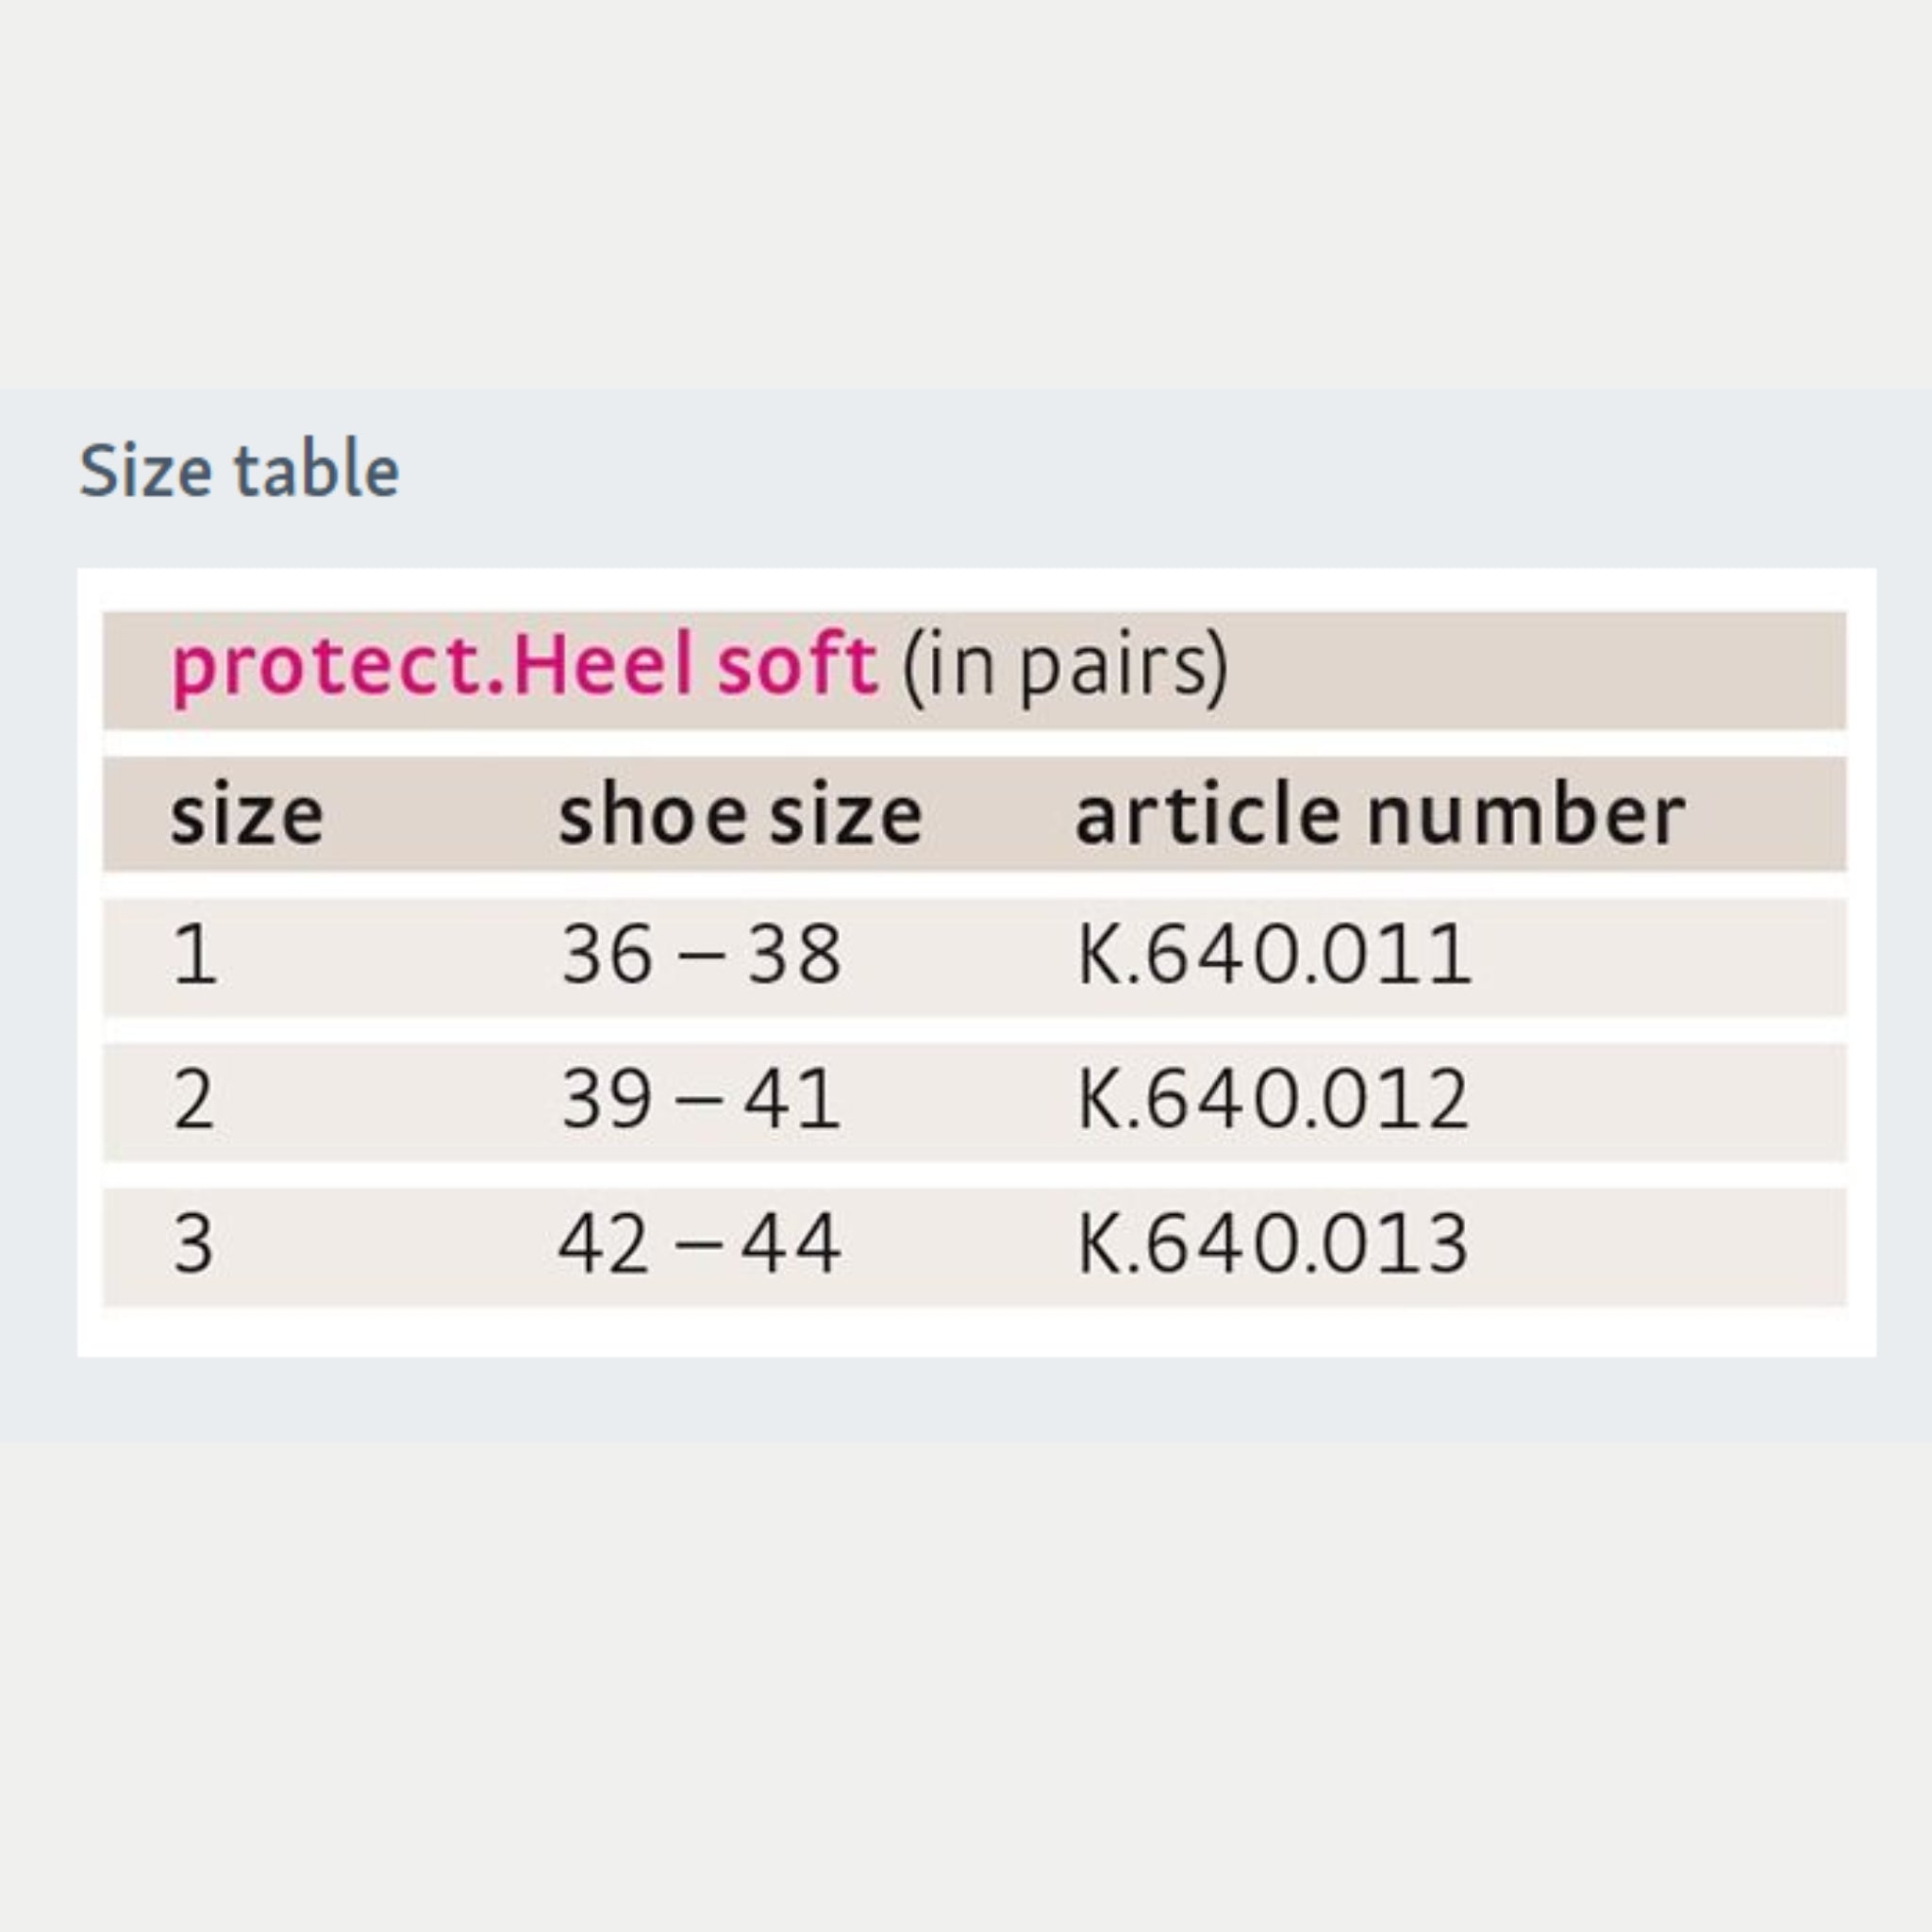 protect.Heel soft (pair)